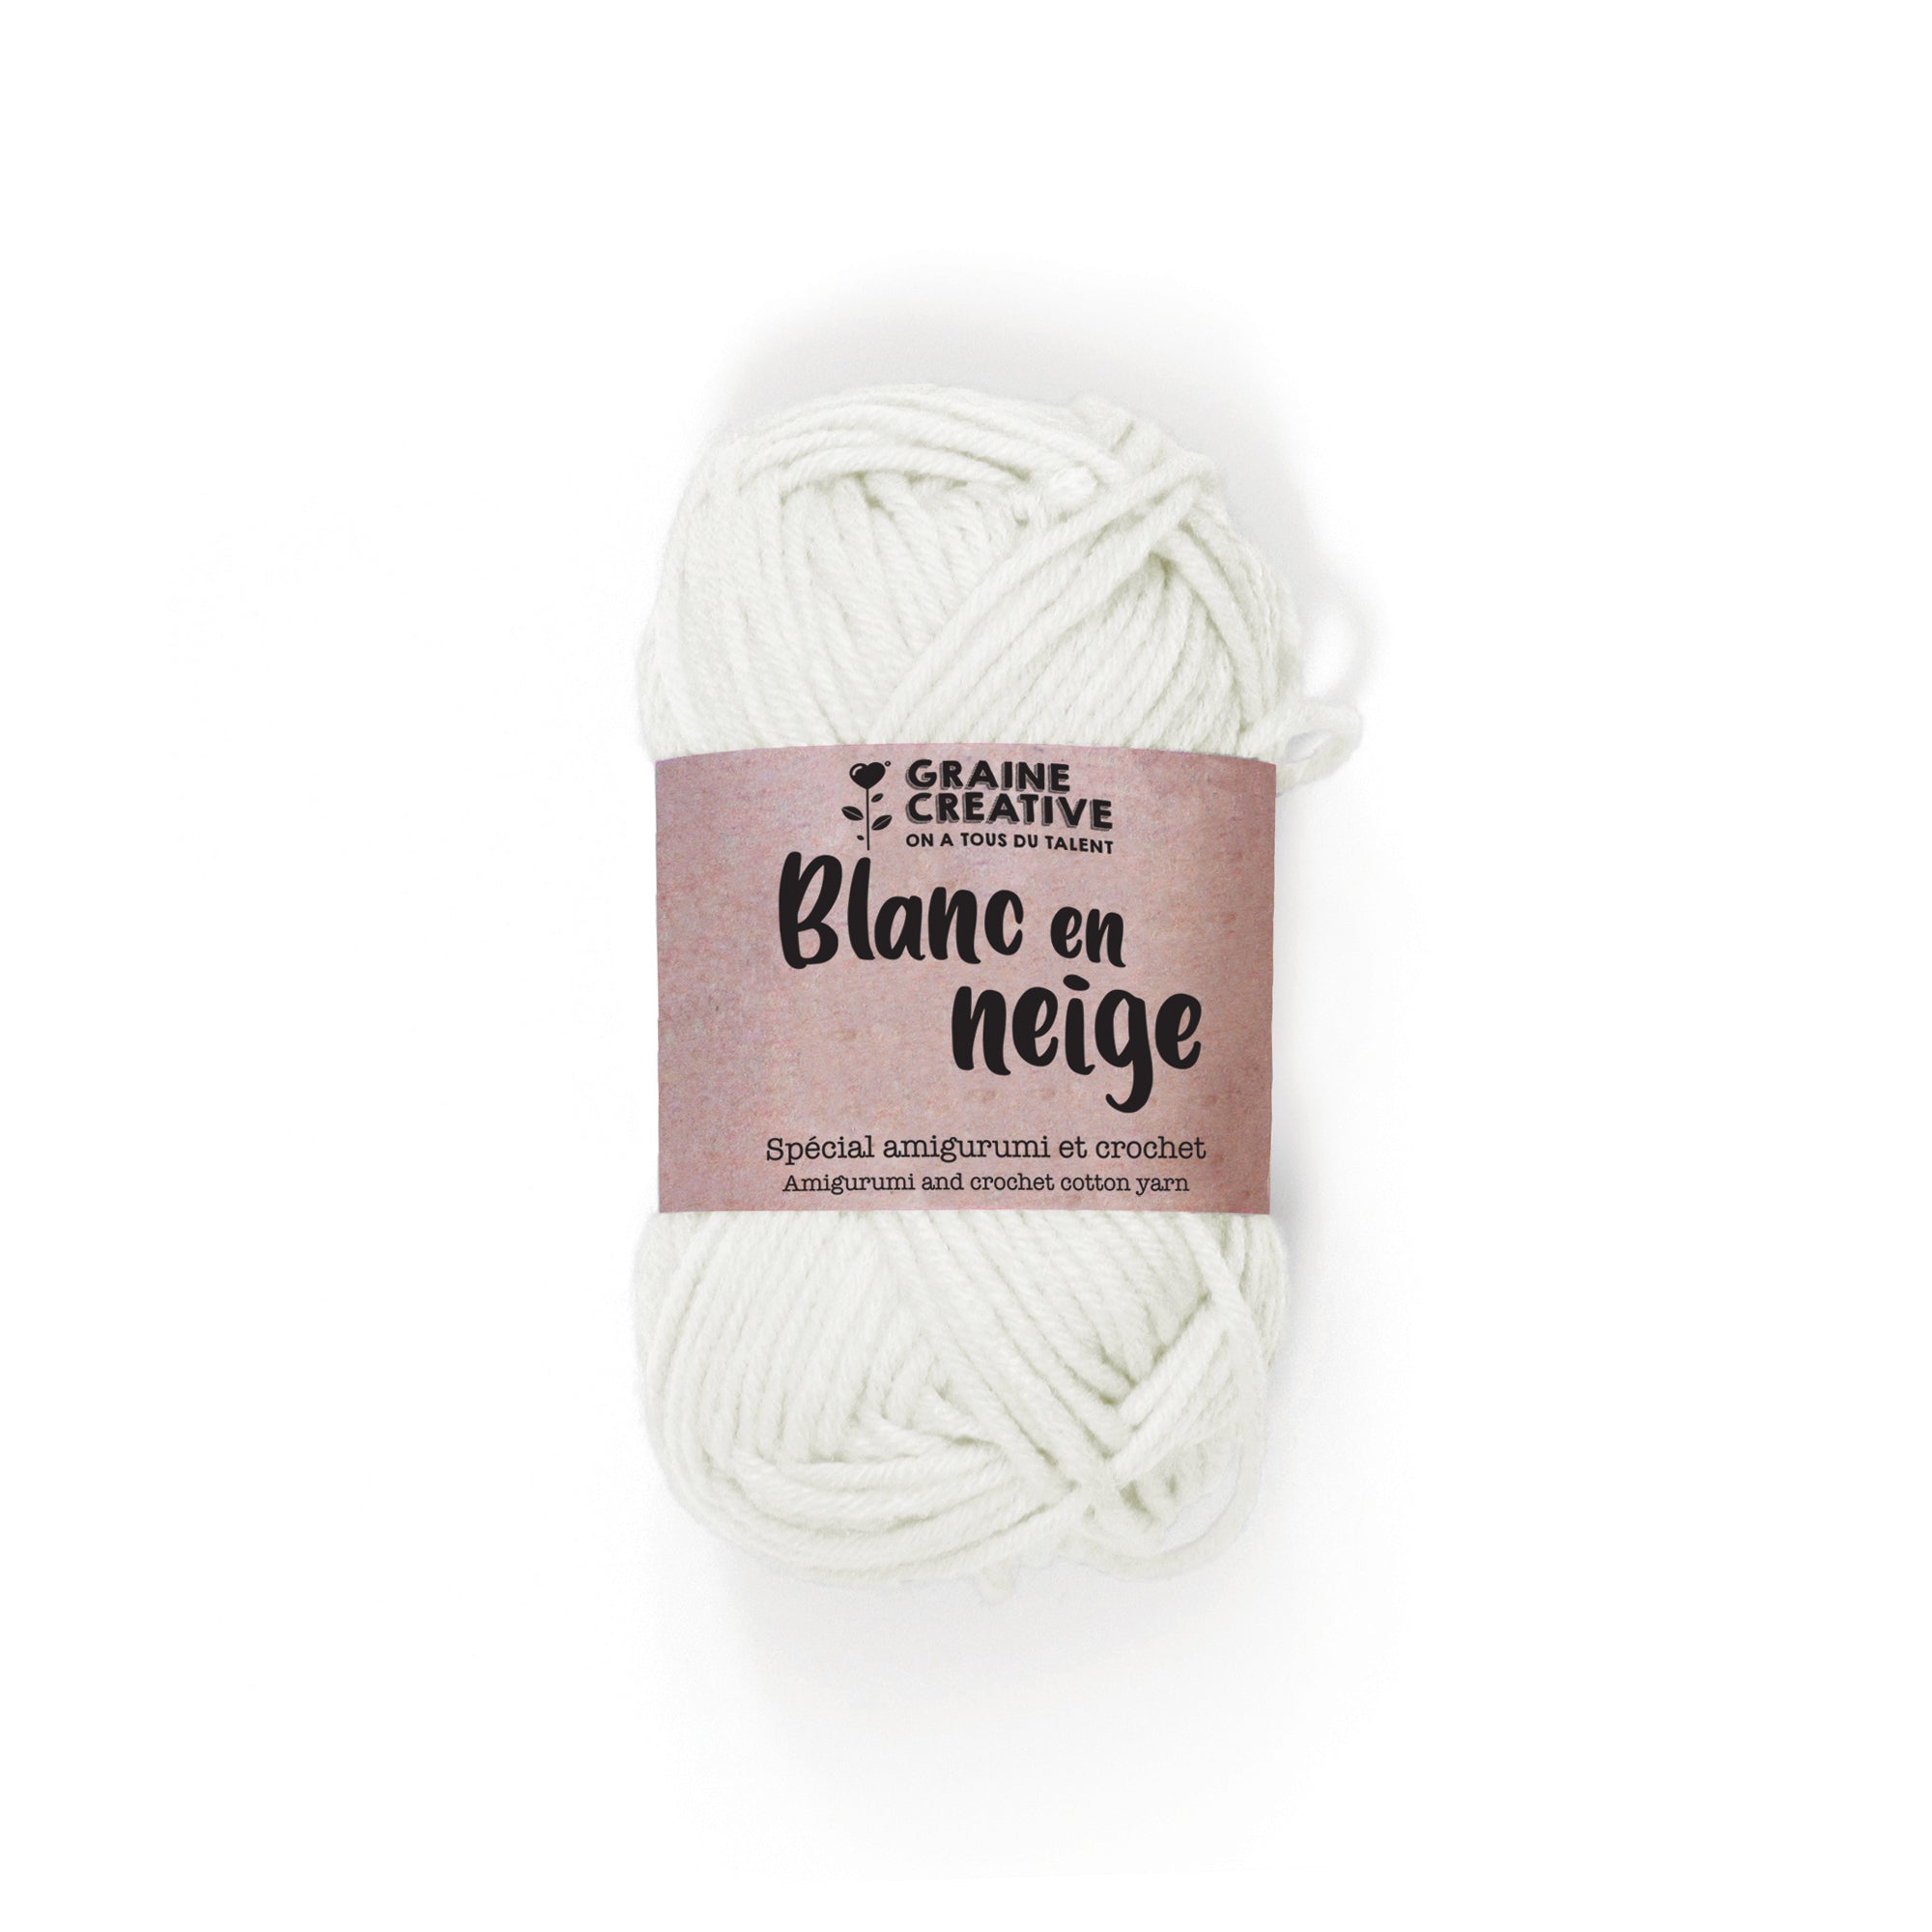 Coton Cablé n°5 - Blanc - 01 - Distrifil - Fil à crocheter - Crochet